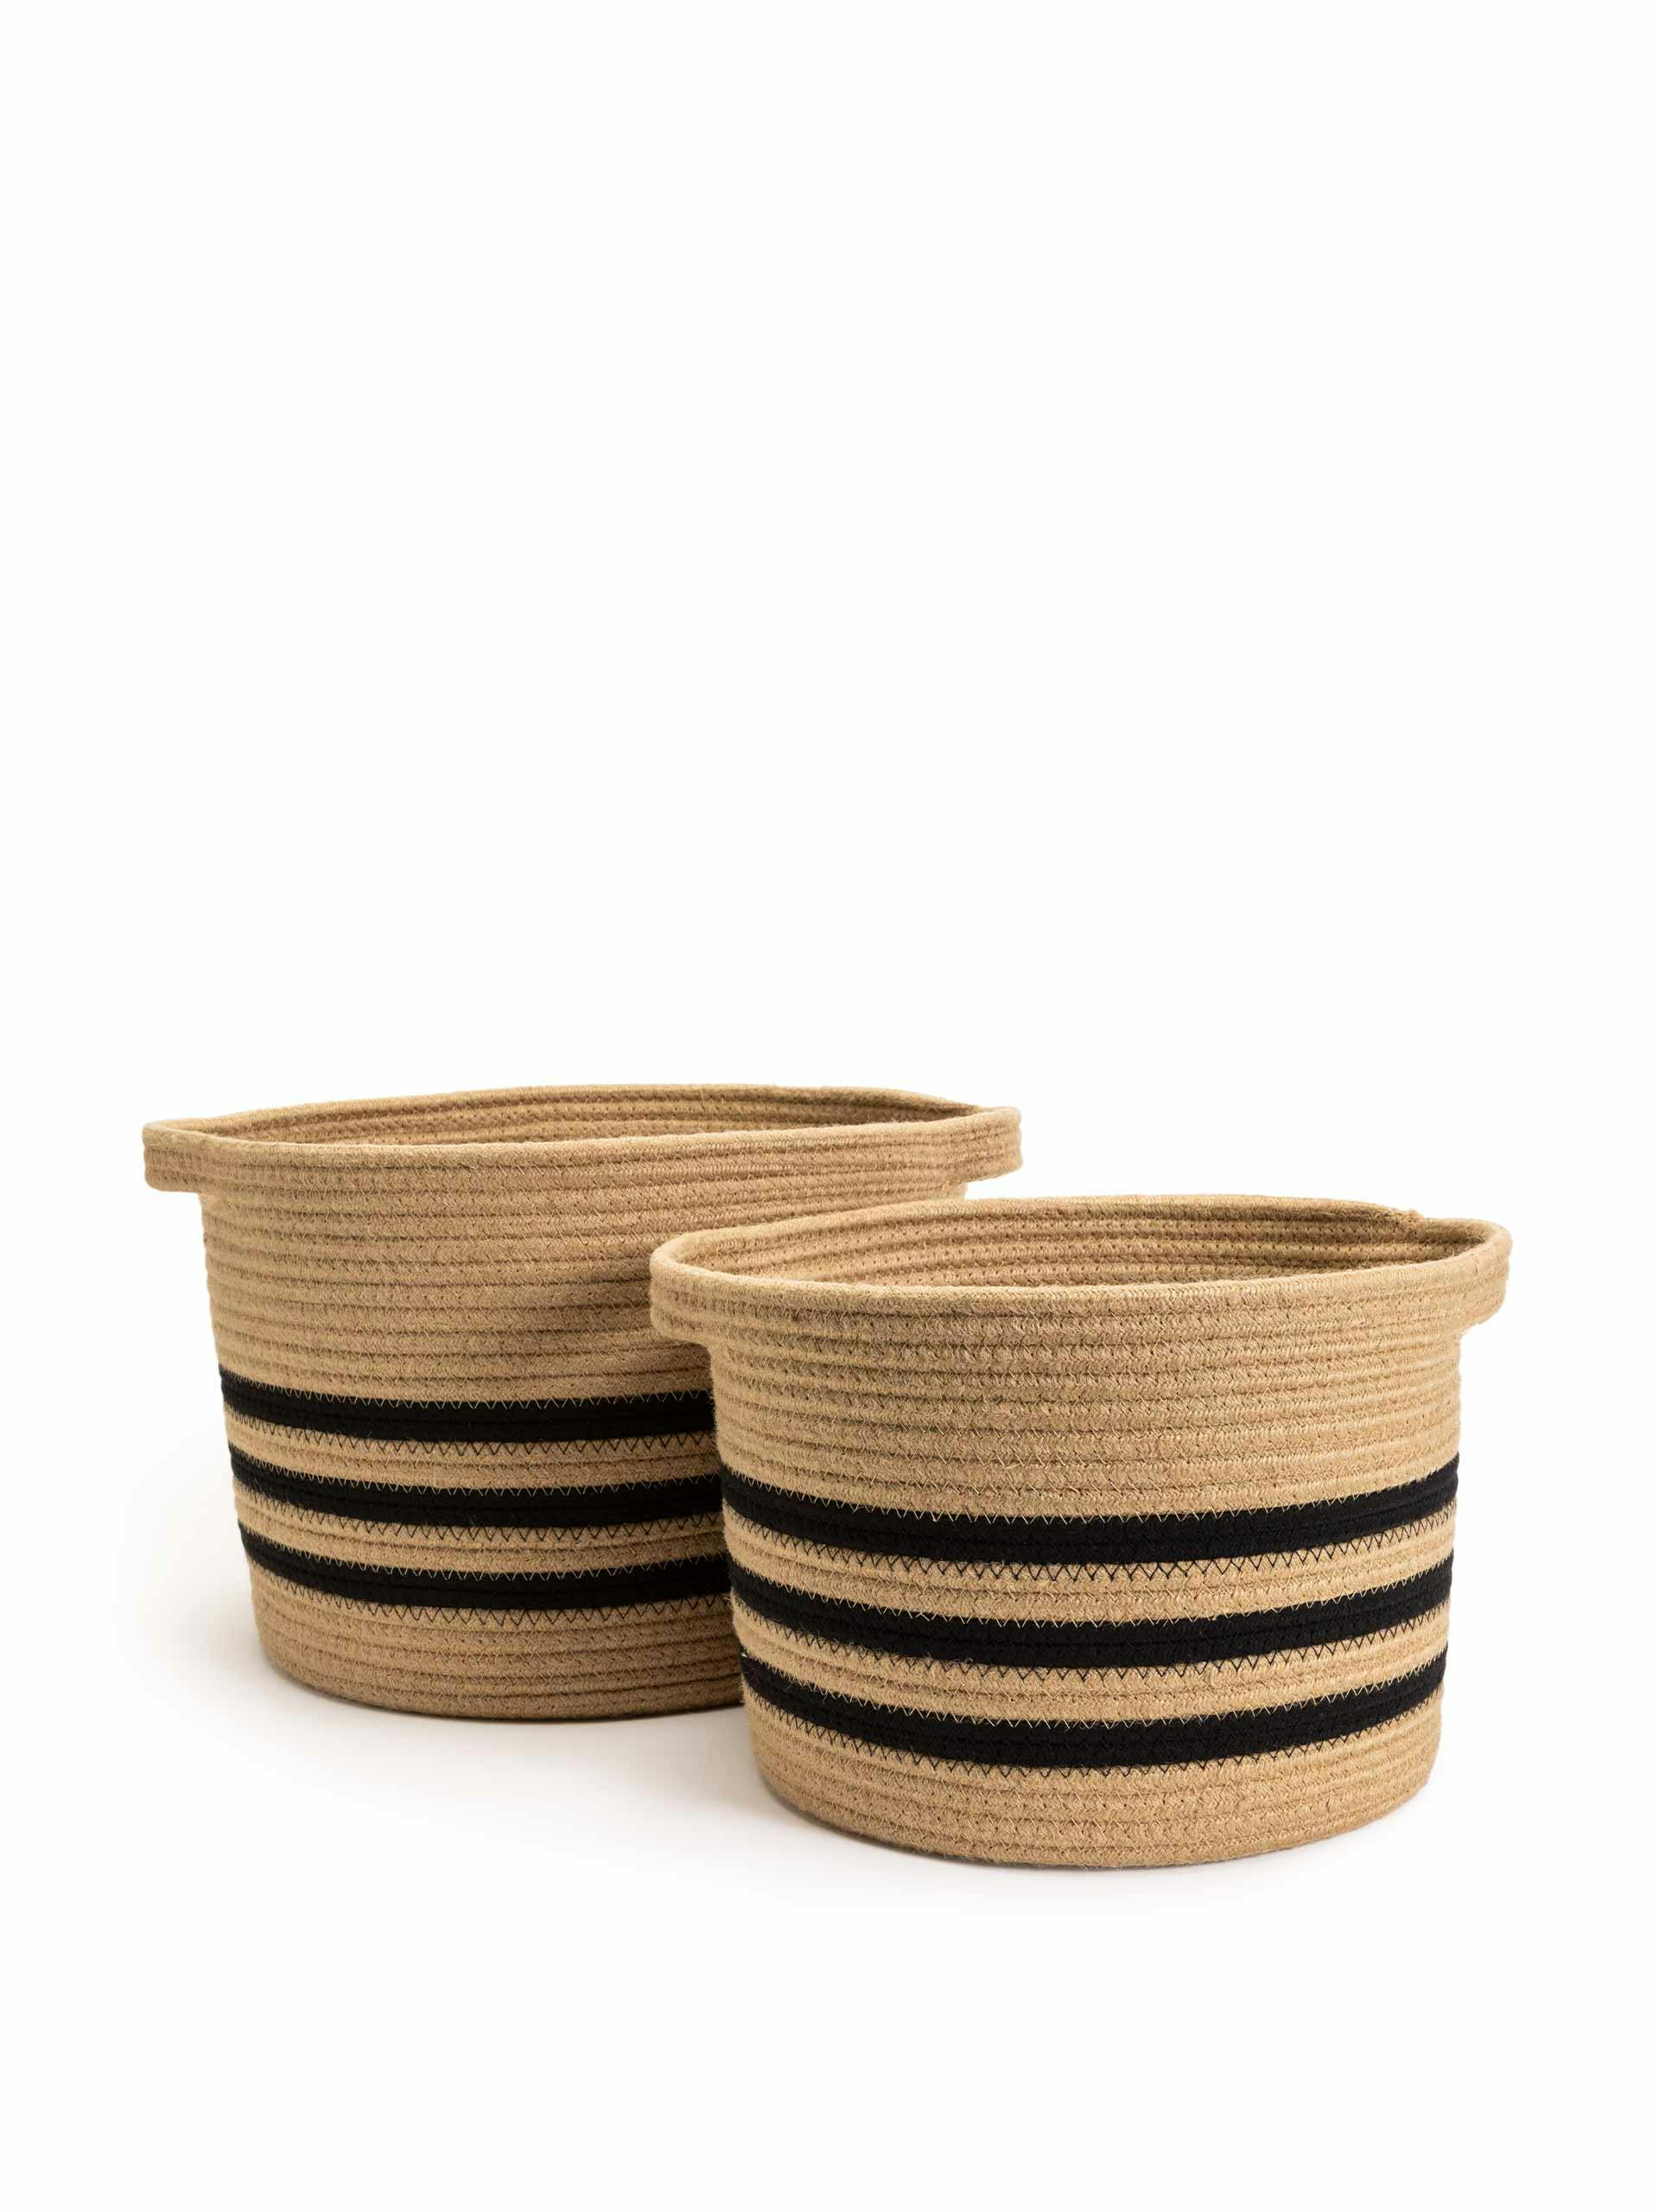 Jute striped stacking baskets